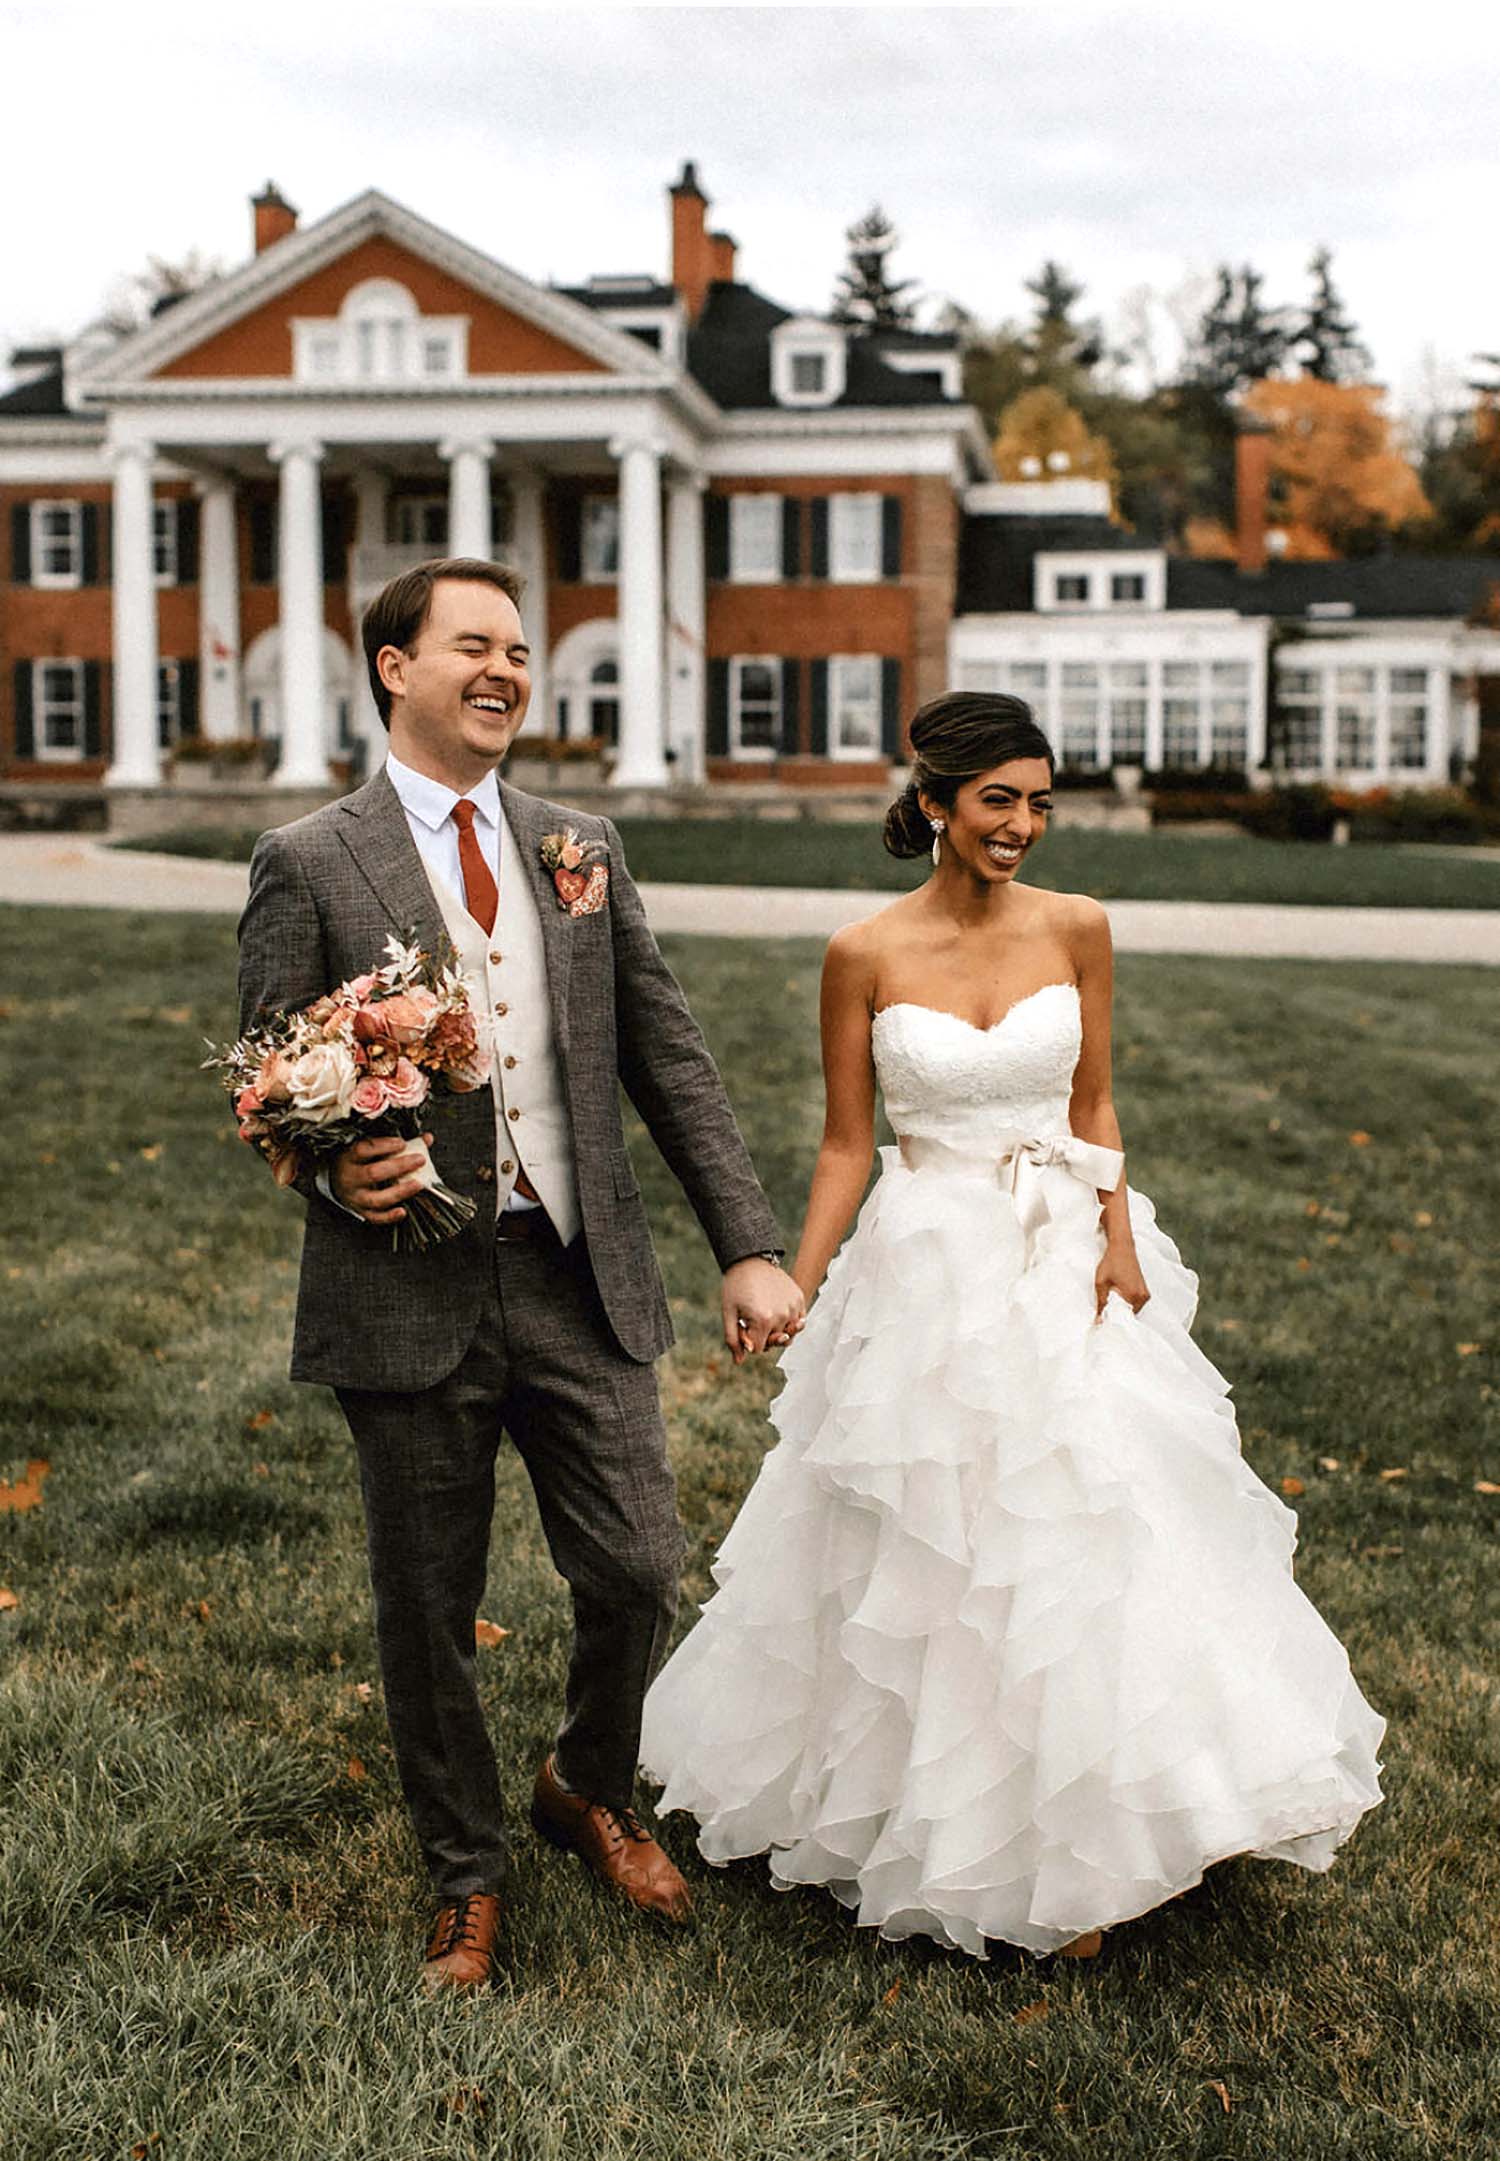 Tom Robertson and his wife walking wedding photo